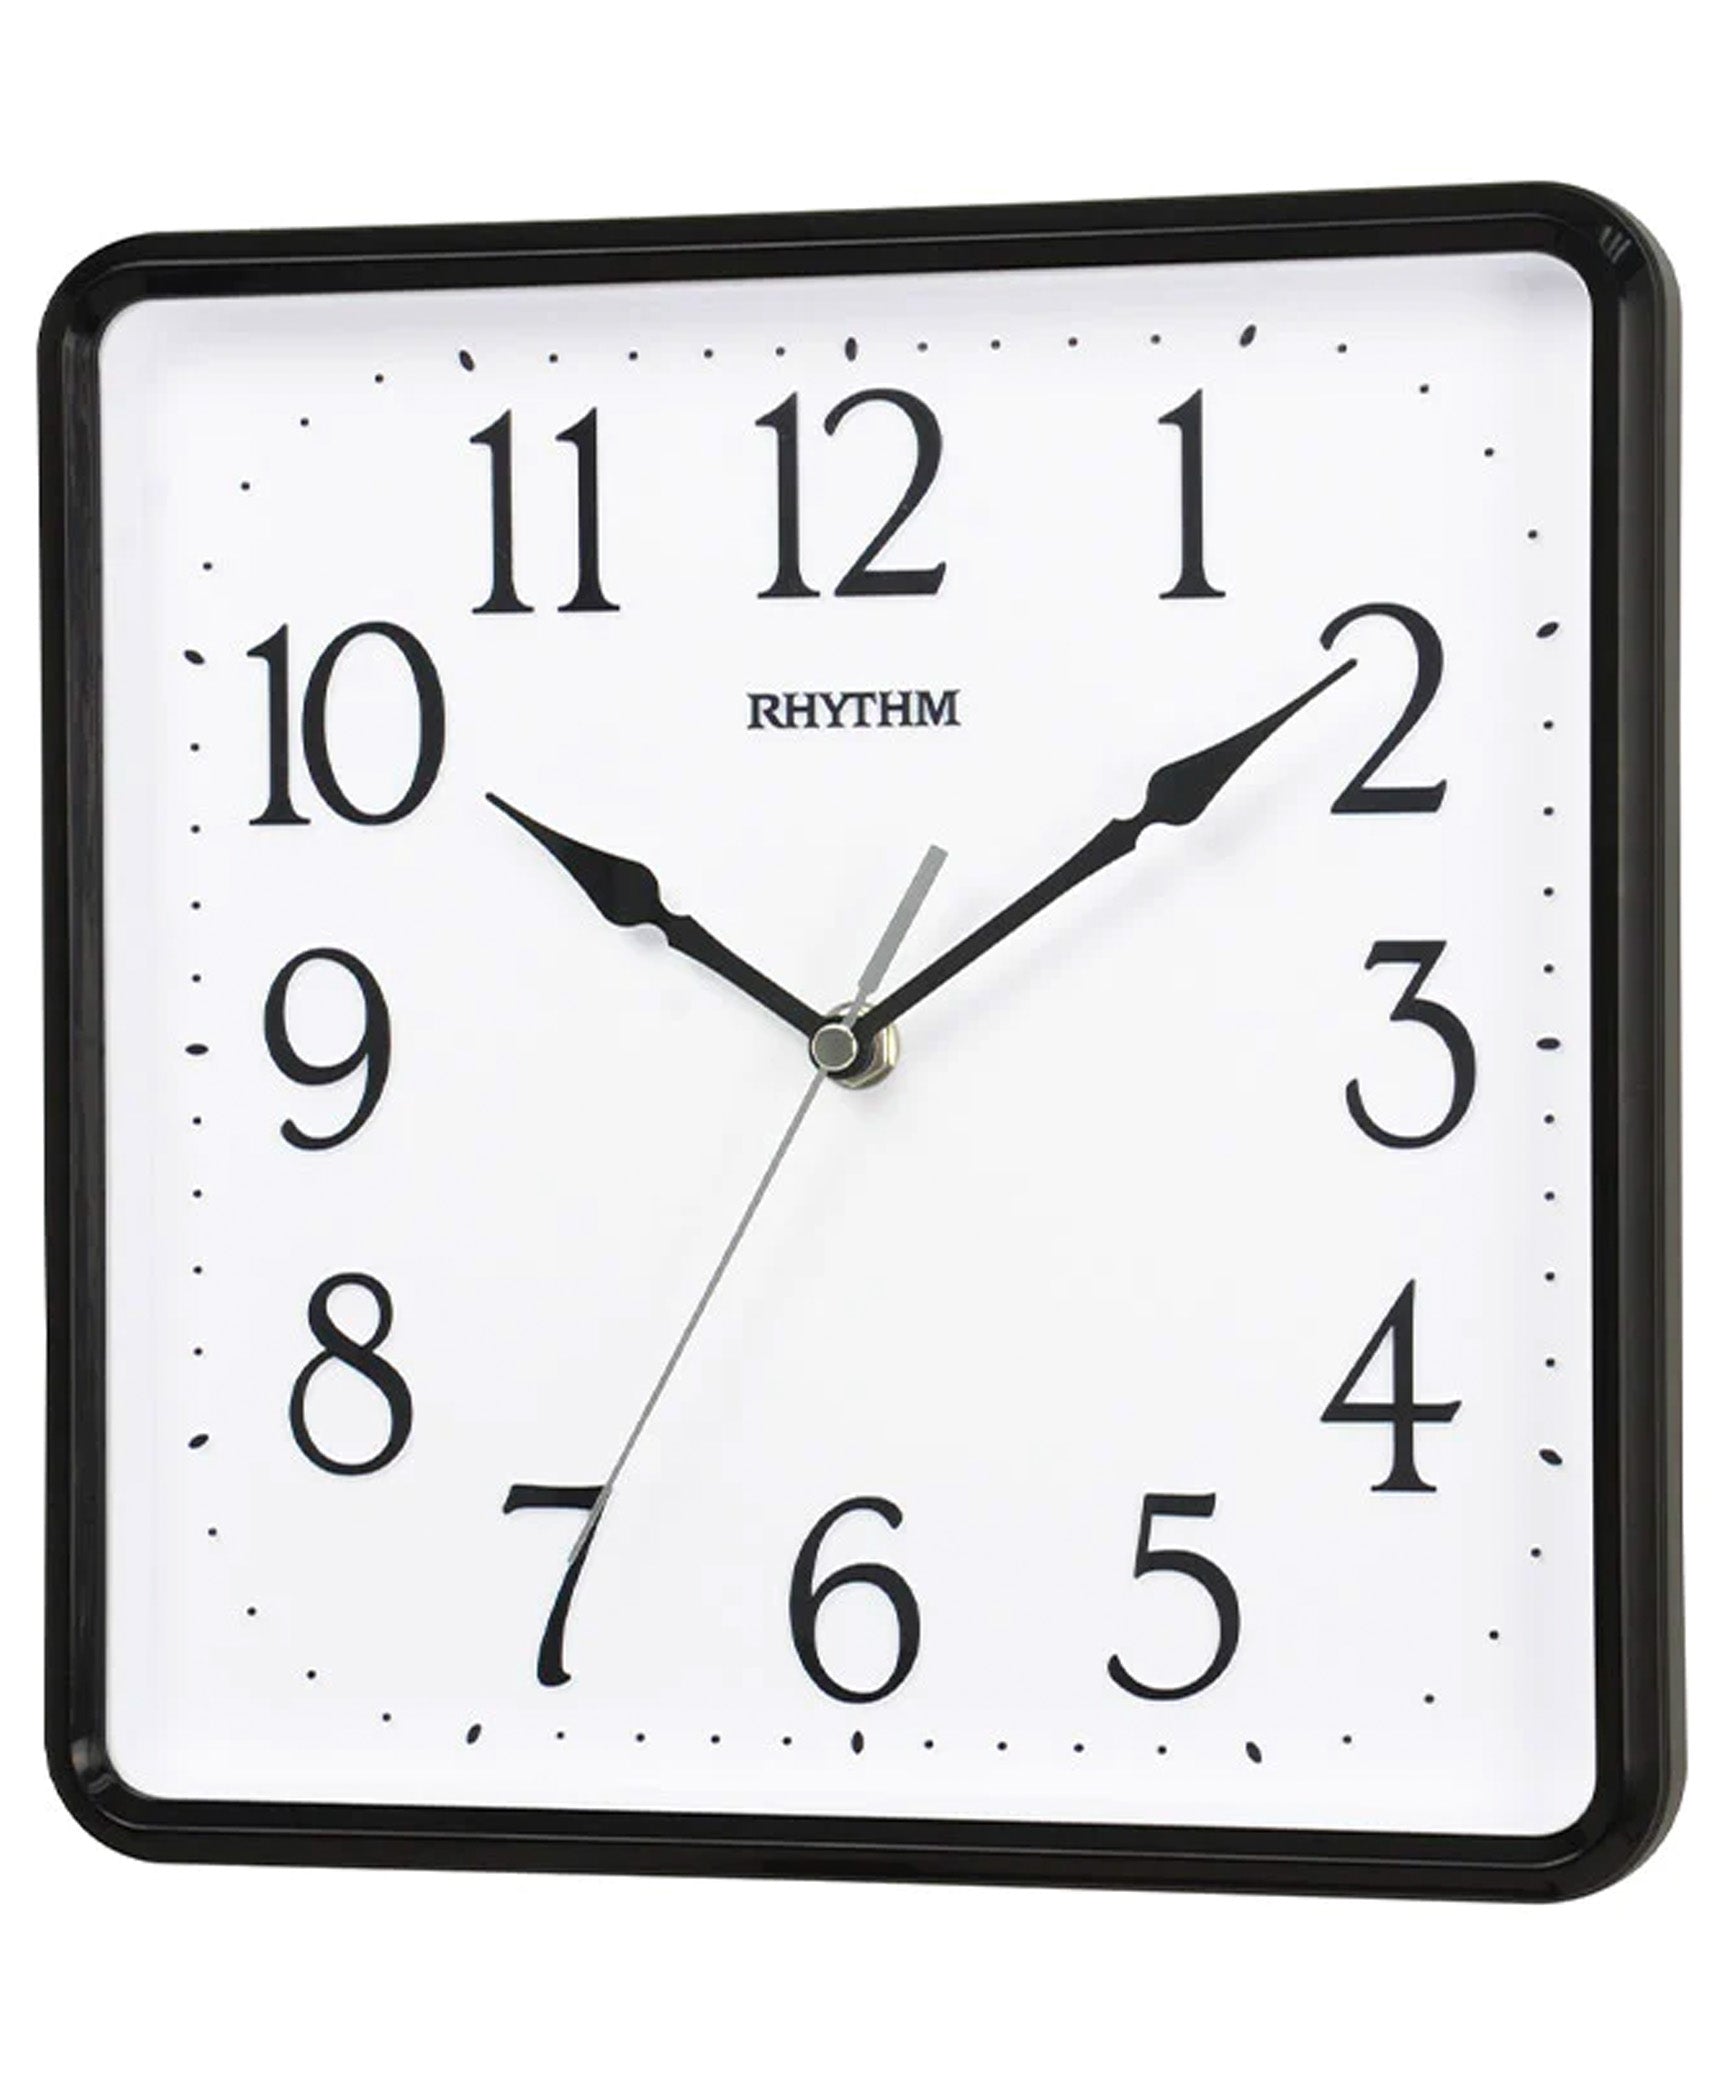 Rhythm Wall Clock Analog CMG597NR02 | stylish watch | accurate timekeeping | wall clock | round clock | Casio watch | wall watch | home décor | timepiece | Halabh.com